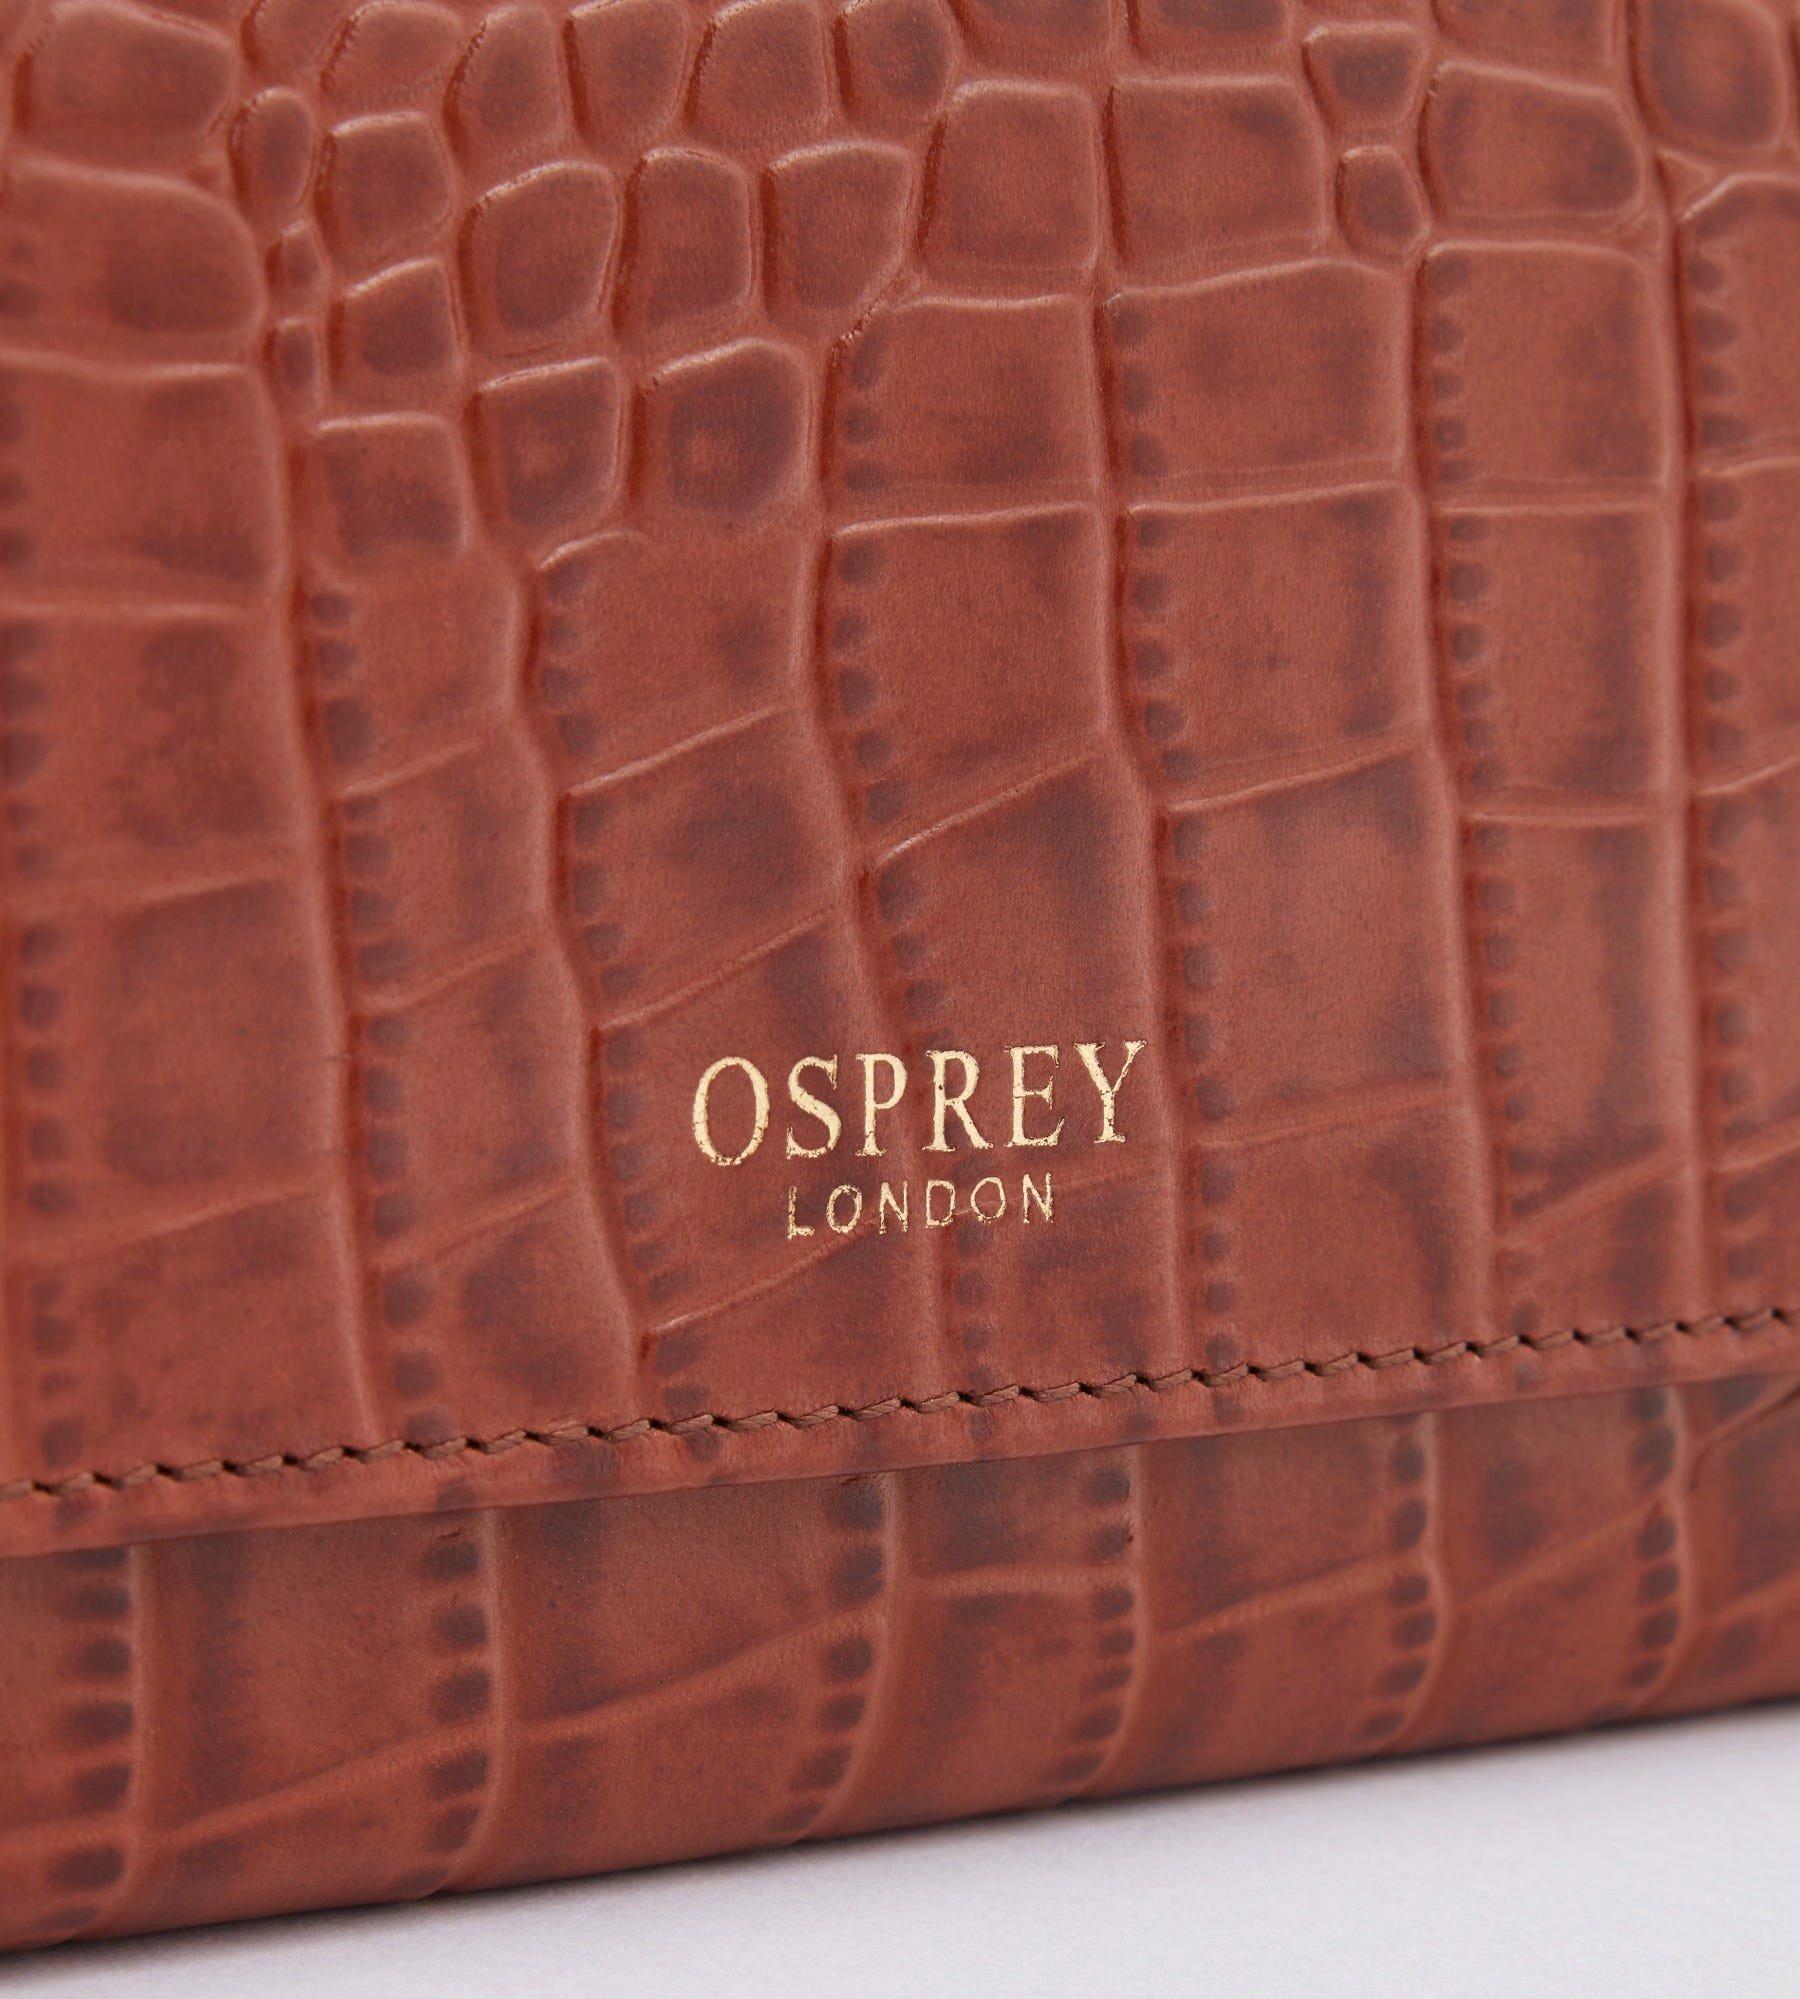 Osprey leather travel purse | Vinted